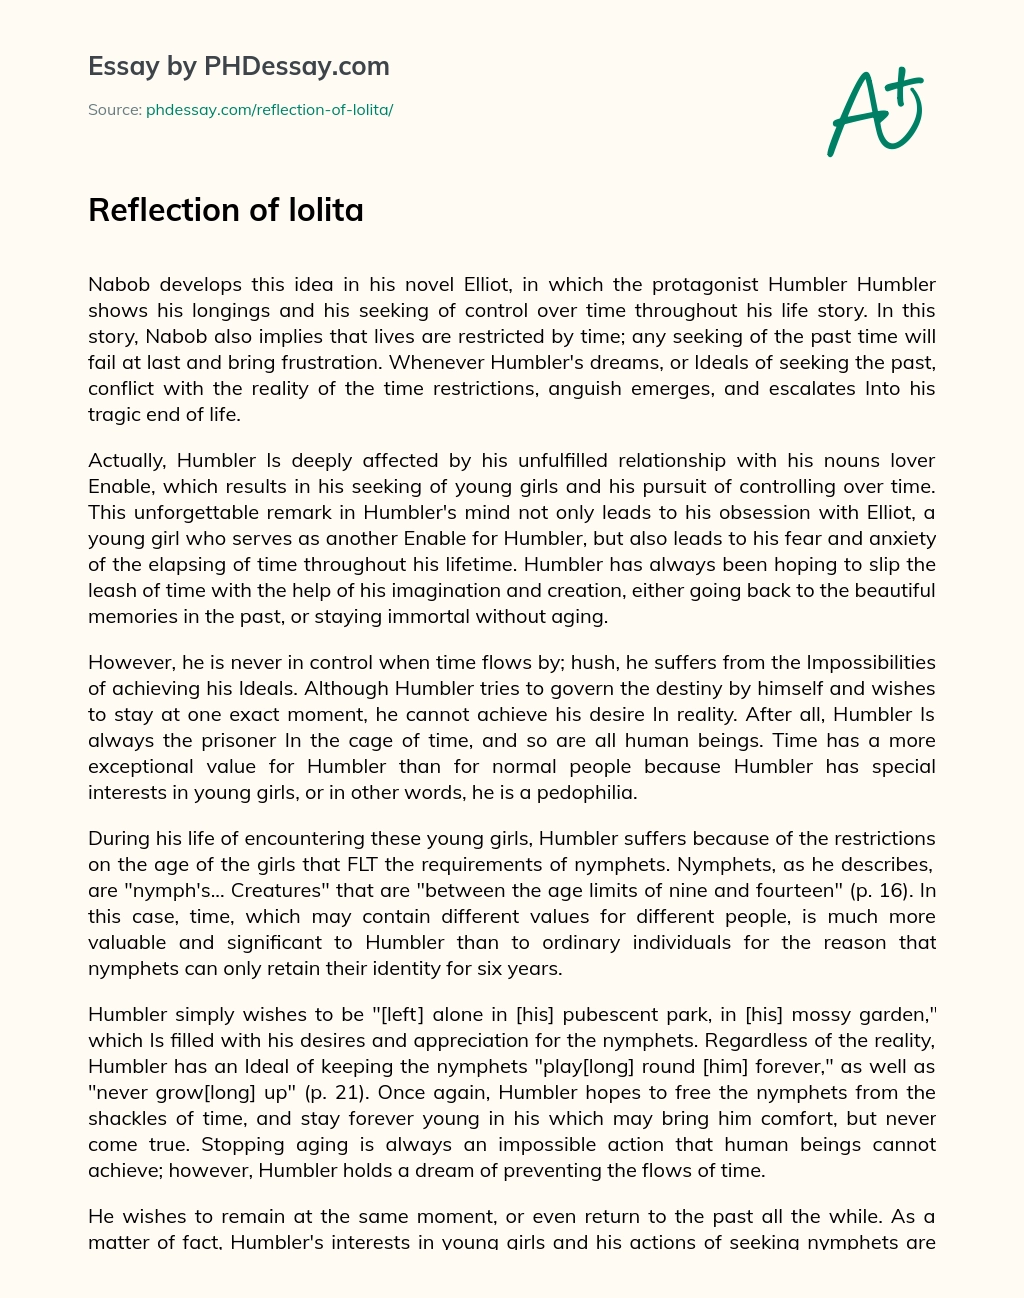 Reflection of lolita essay